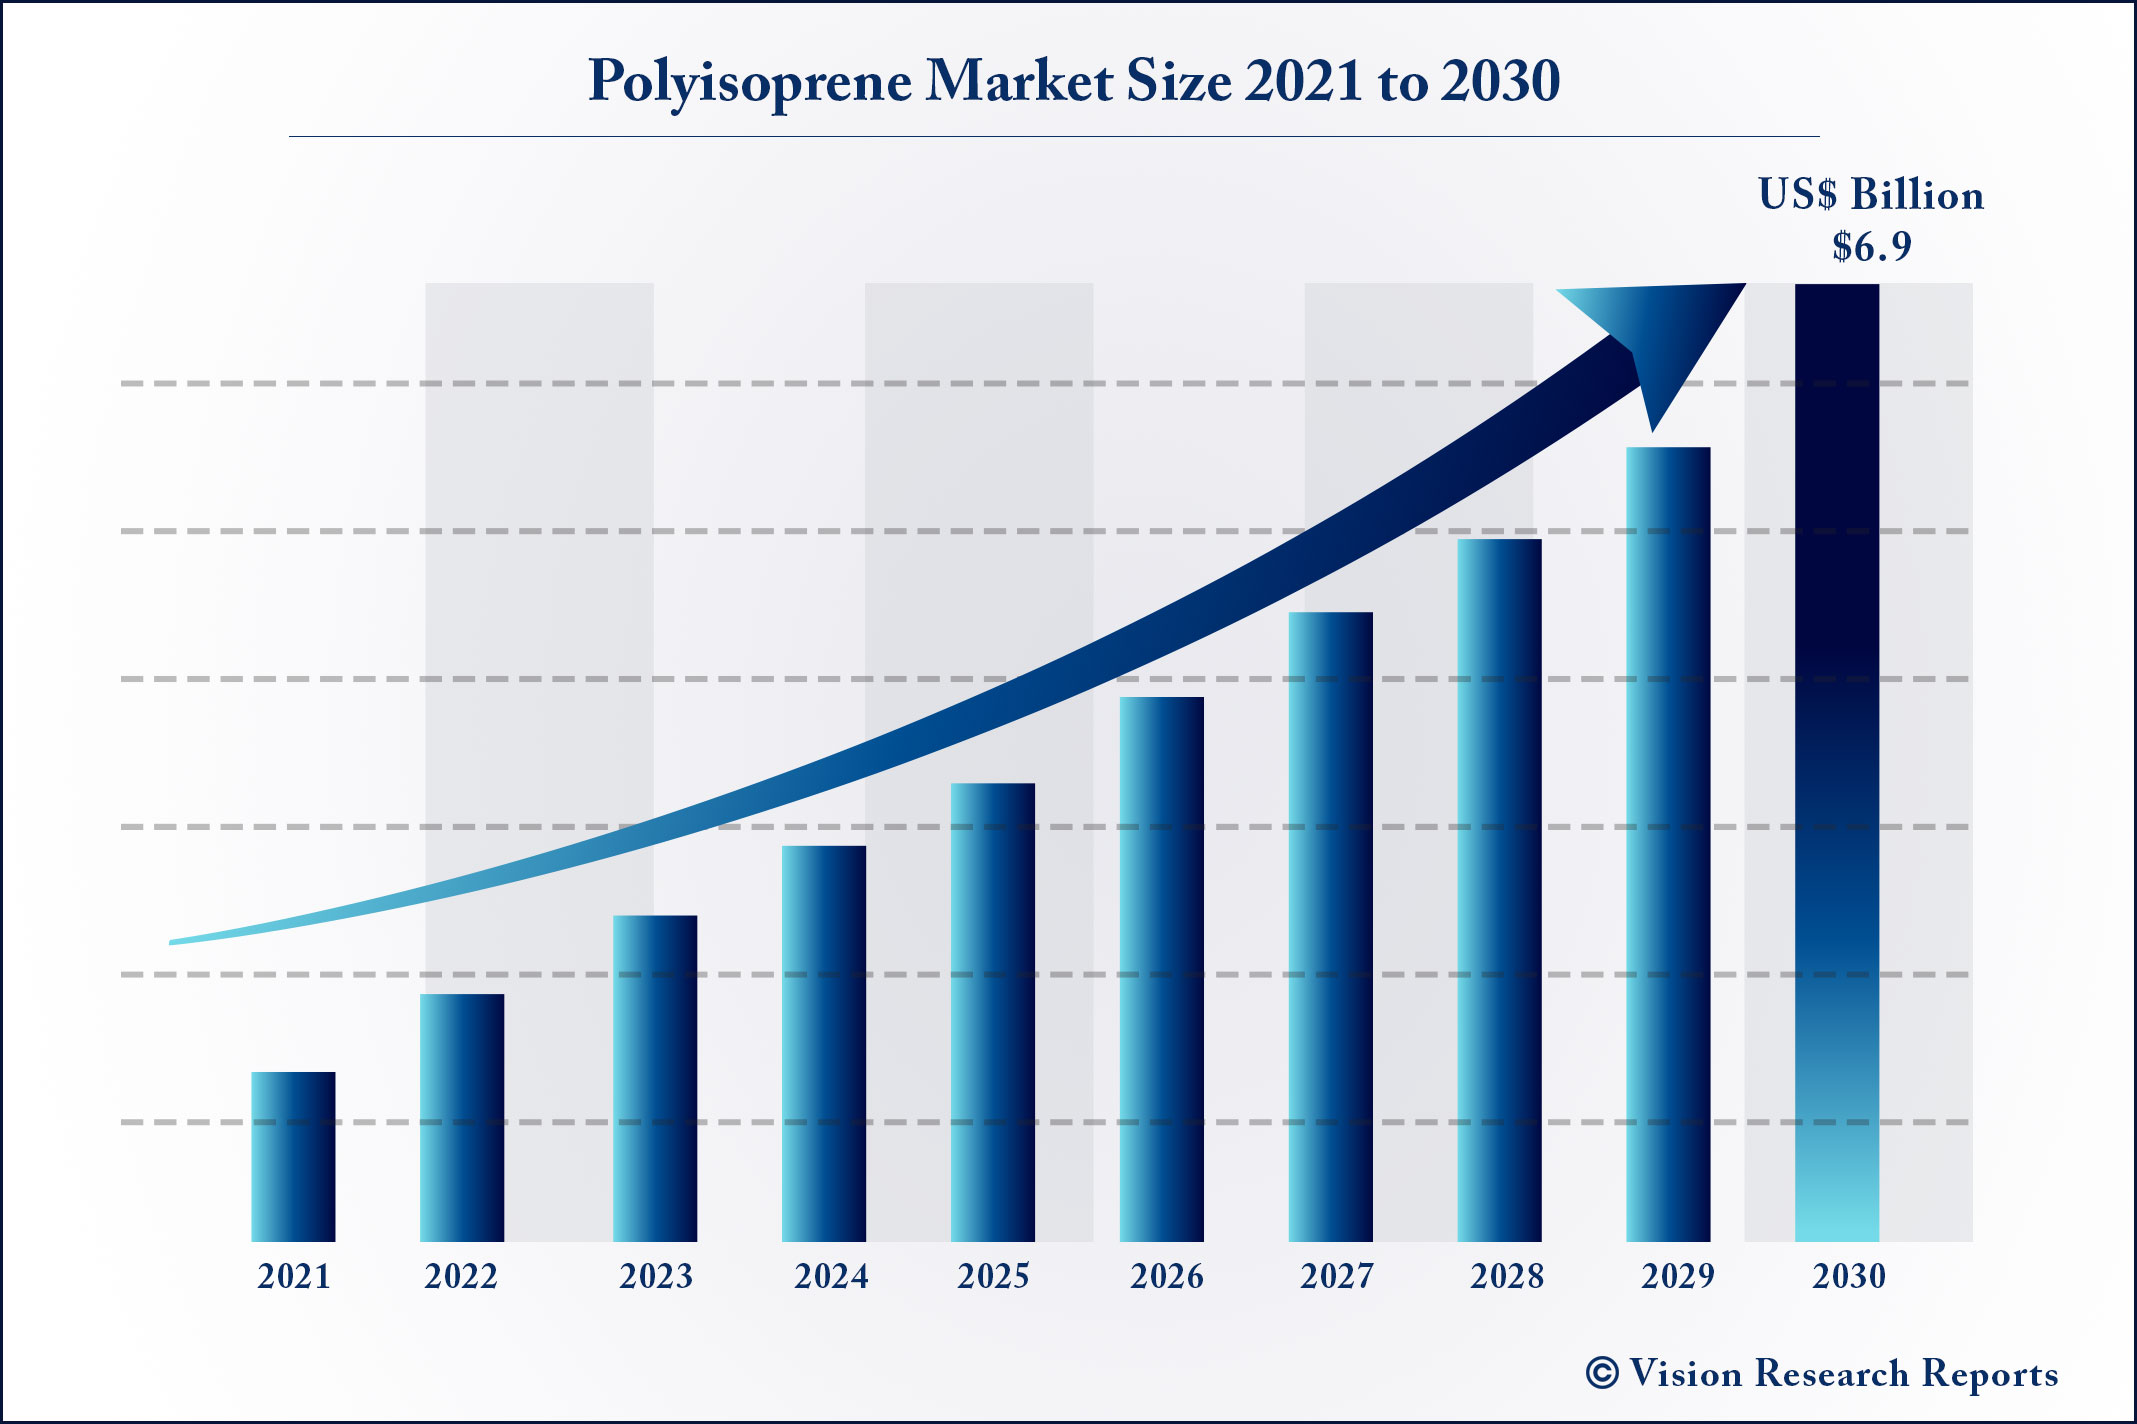 Polyisoprene Market Size 2021 to 2030